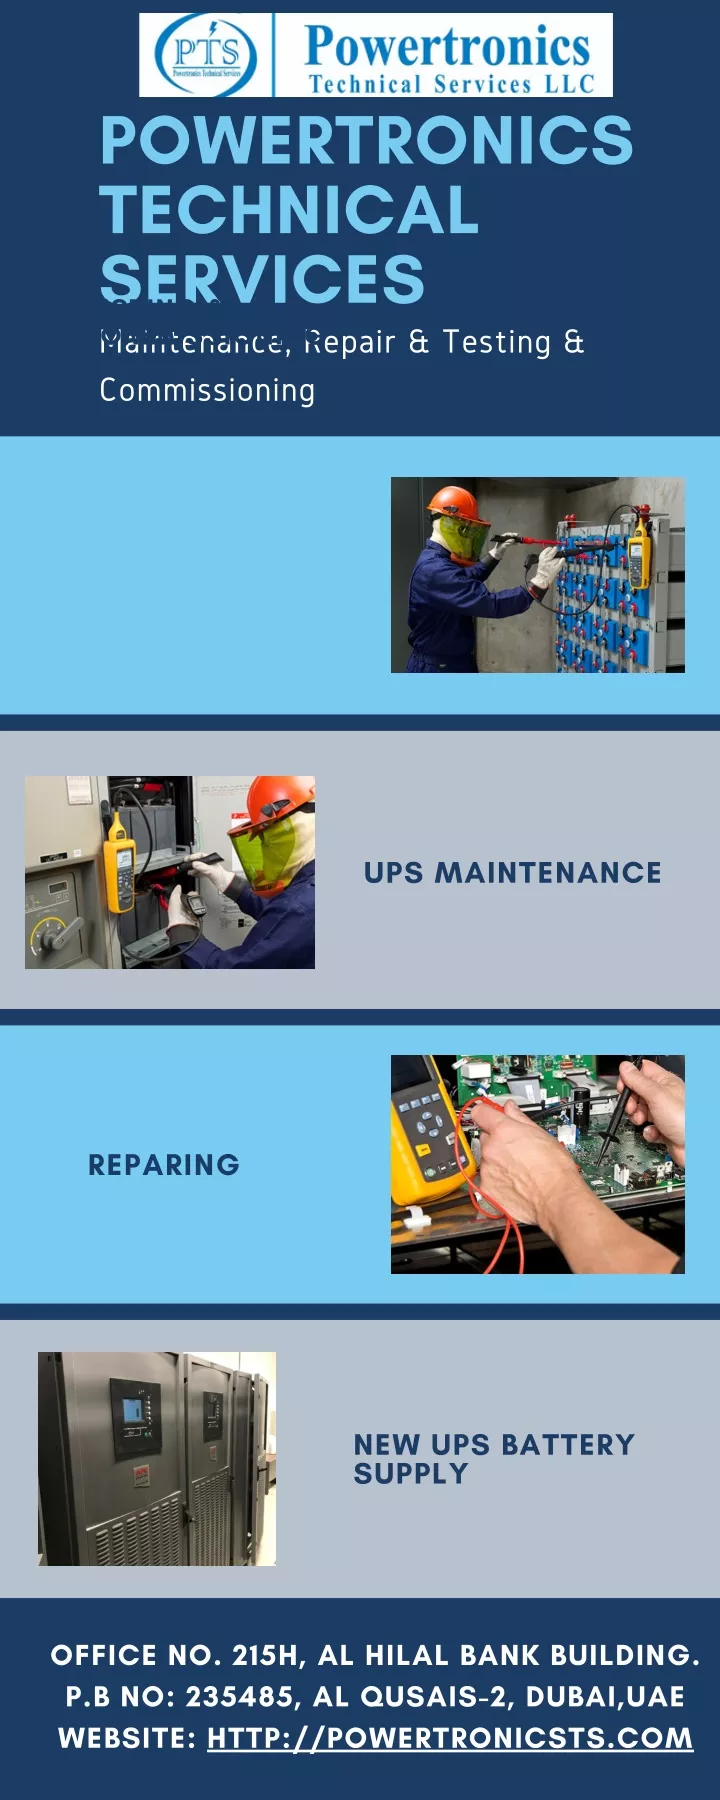 powertronics technical services maintenance